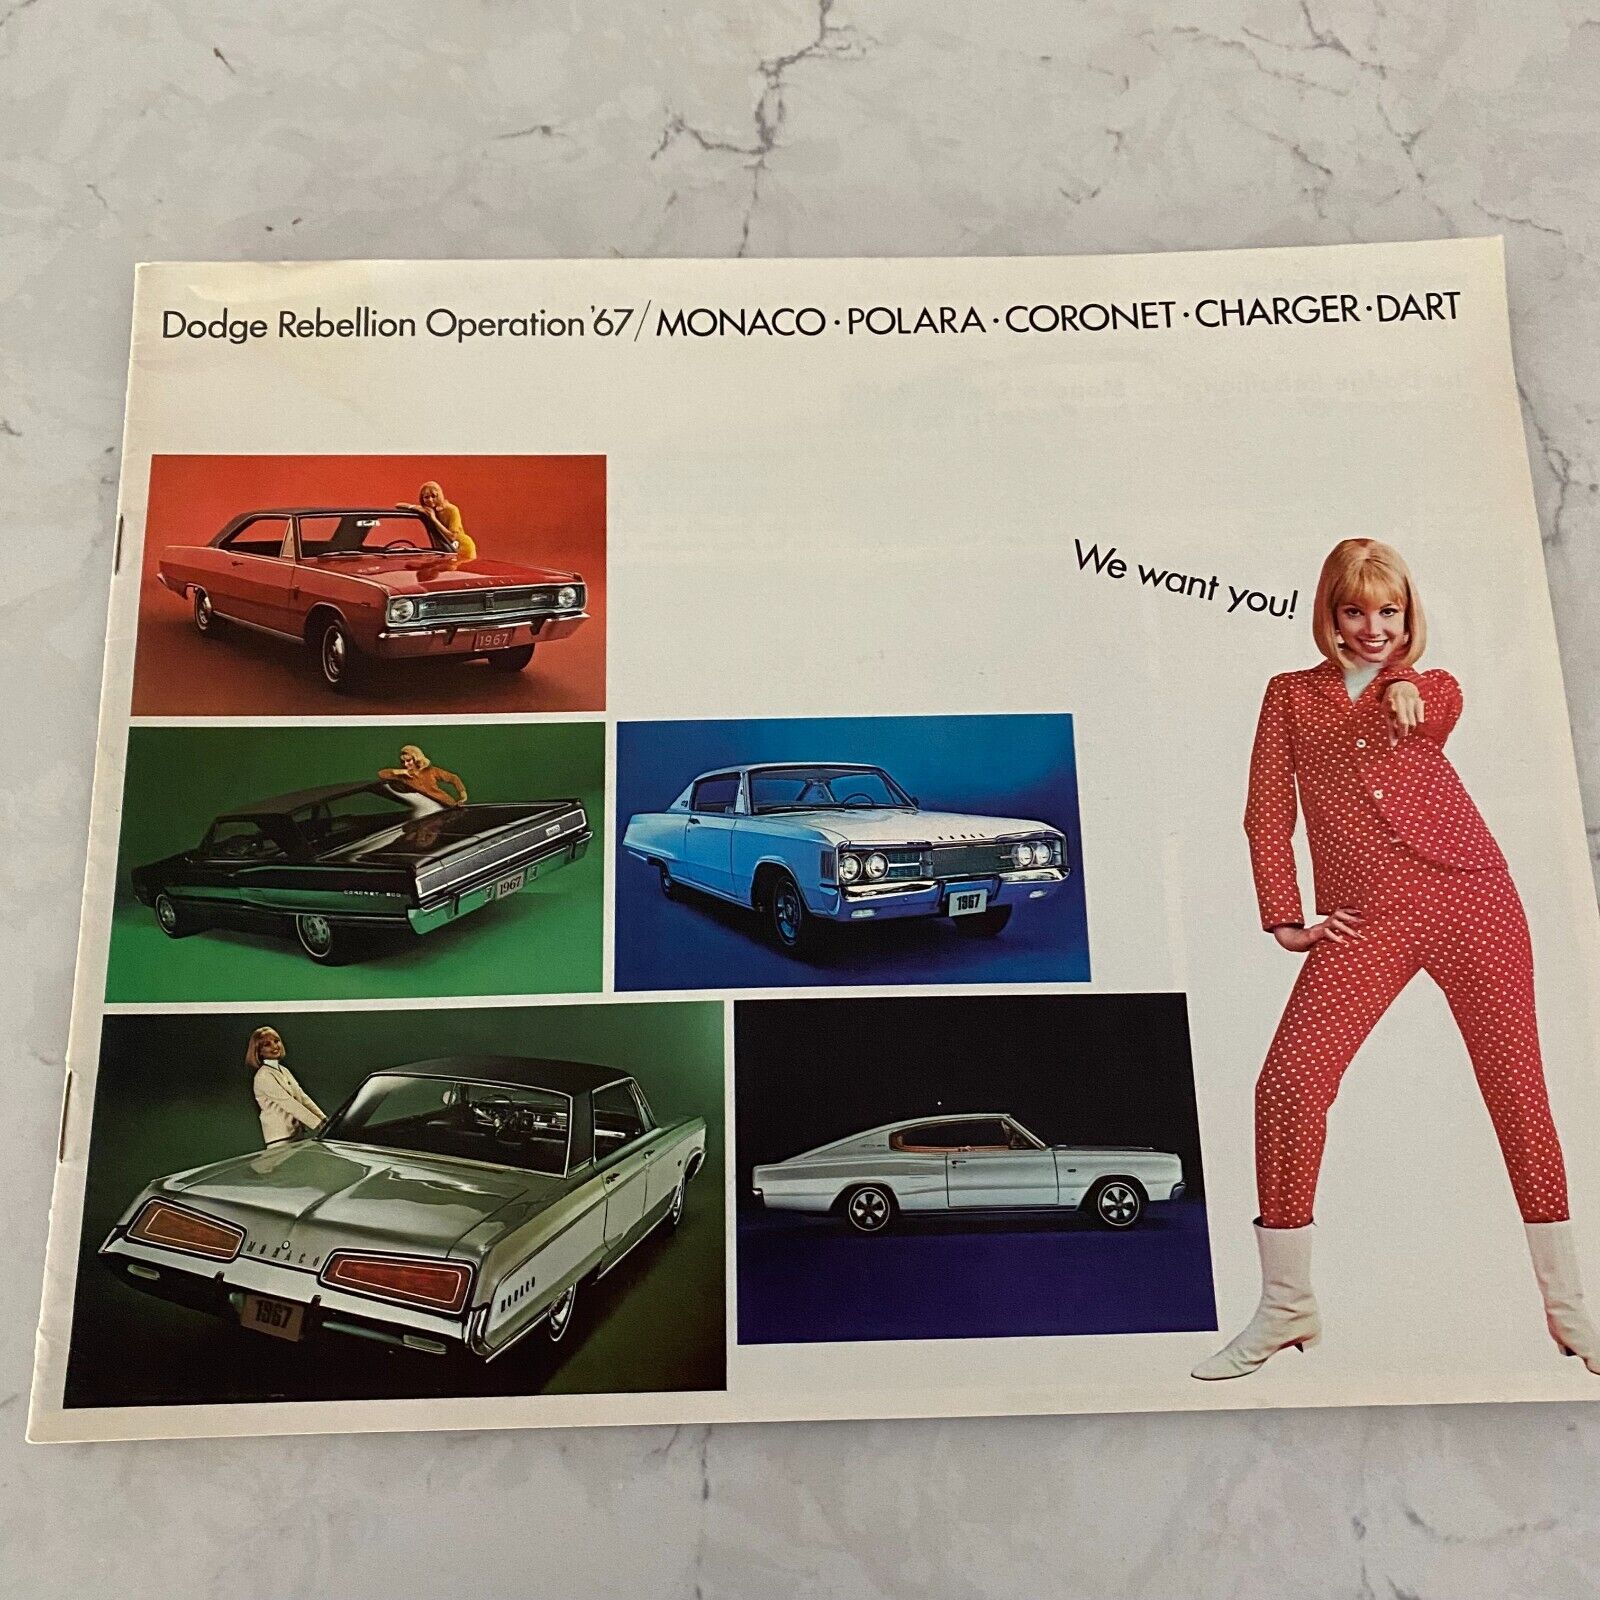 1967 Dodge Rebellion Monaco, Polara, Coronet, Charger Dart Dealer Sales Brochure